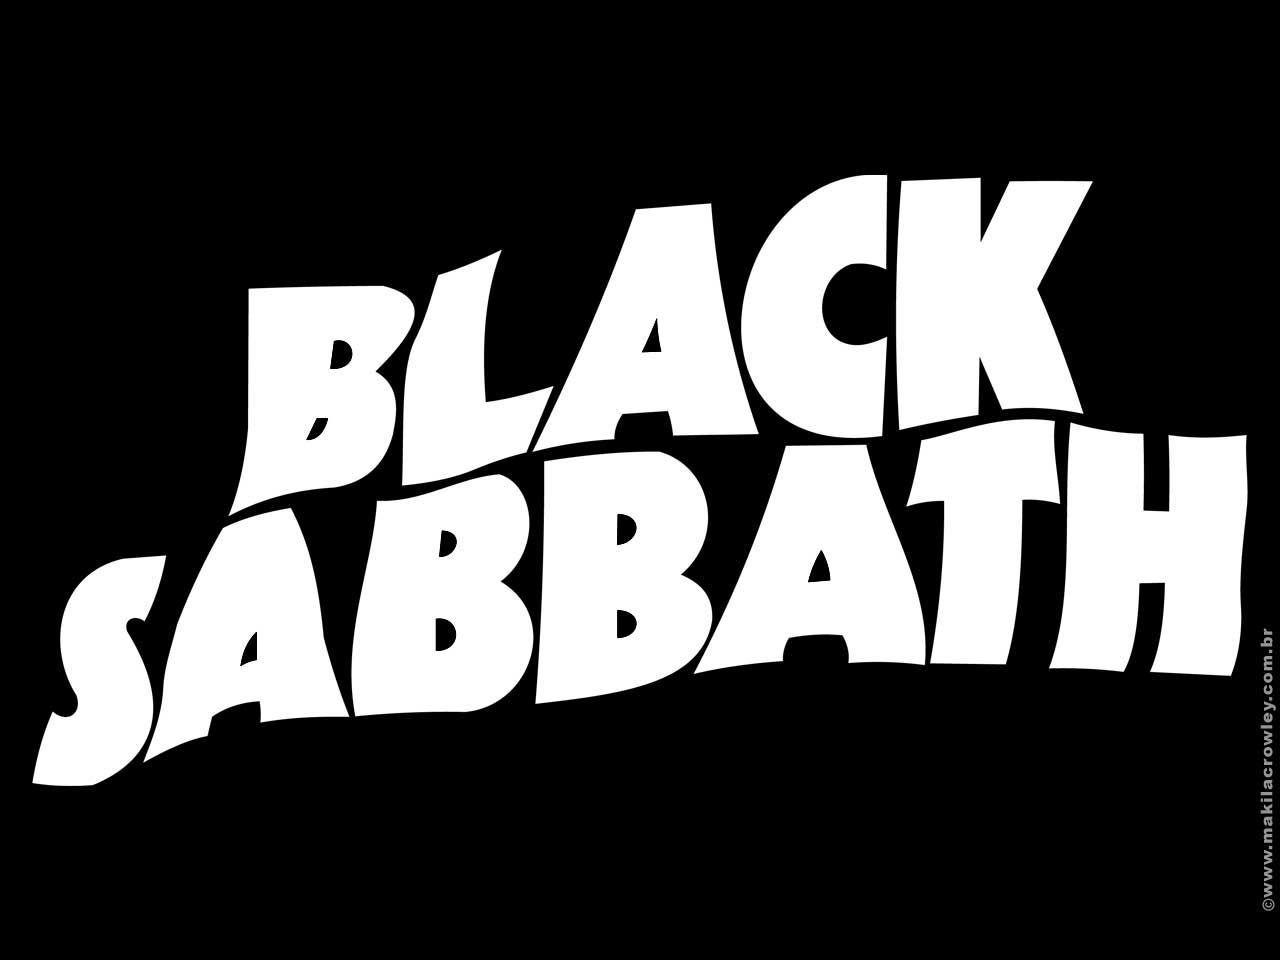 Black Sabbath Wallpaper Backgrounds 1920x1080PX ~ Wallpapers Black